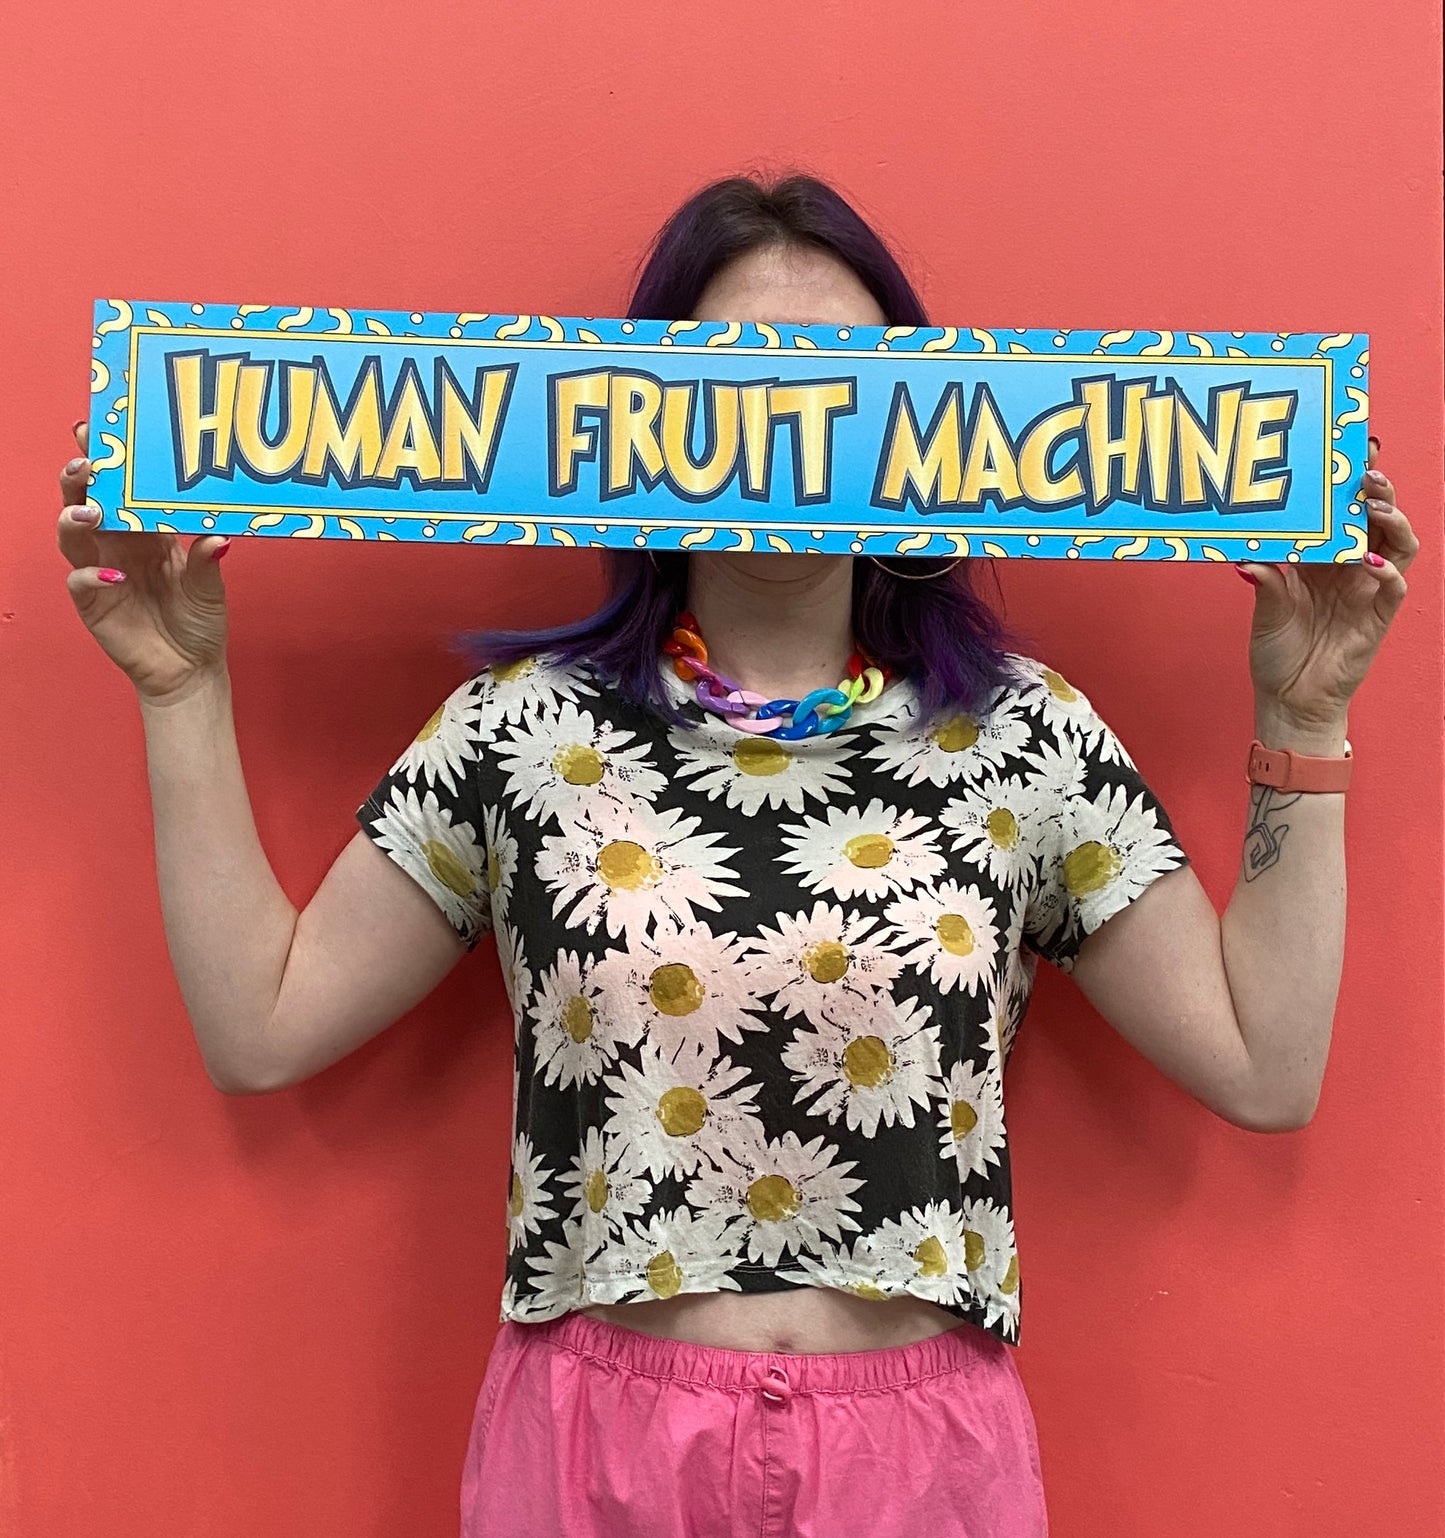 Human Fruit Machine Sign